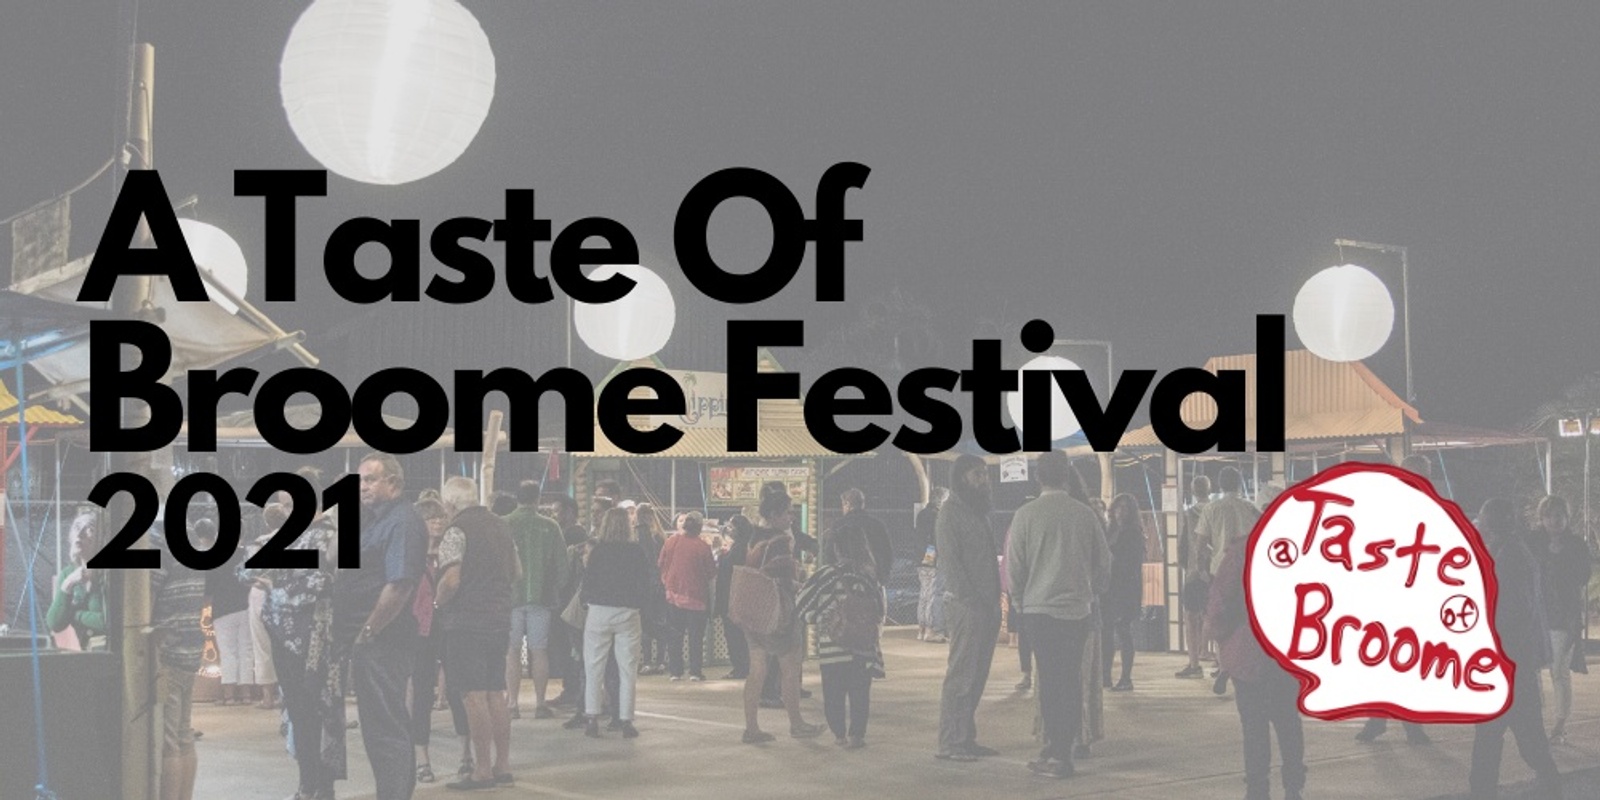 Banner image for A Taste Of Broome Festival 2021 